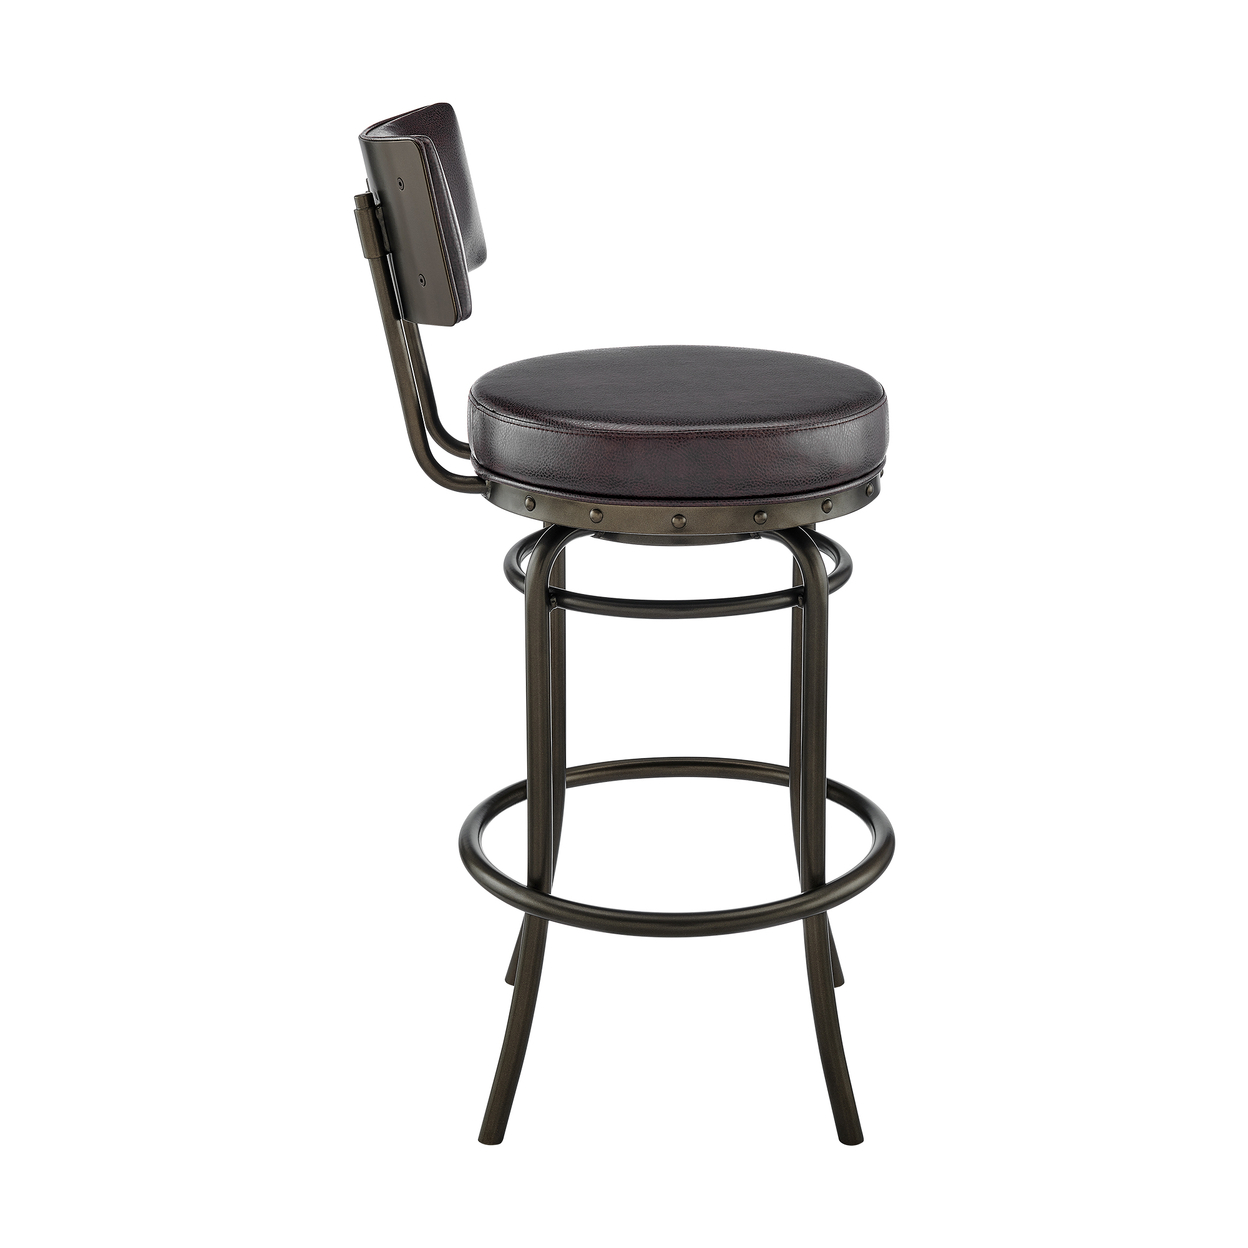 Felicity 30 Inch Round Swivel Bar Stool Chair, Brown Faux Leather Cushions- Saltoro Sherpi